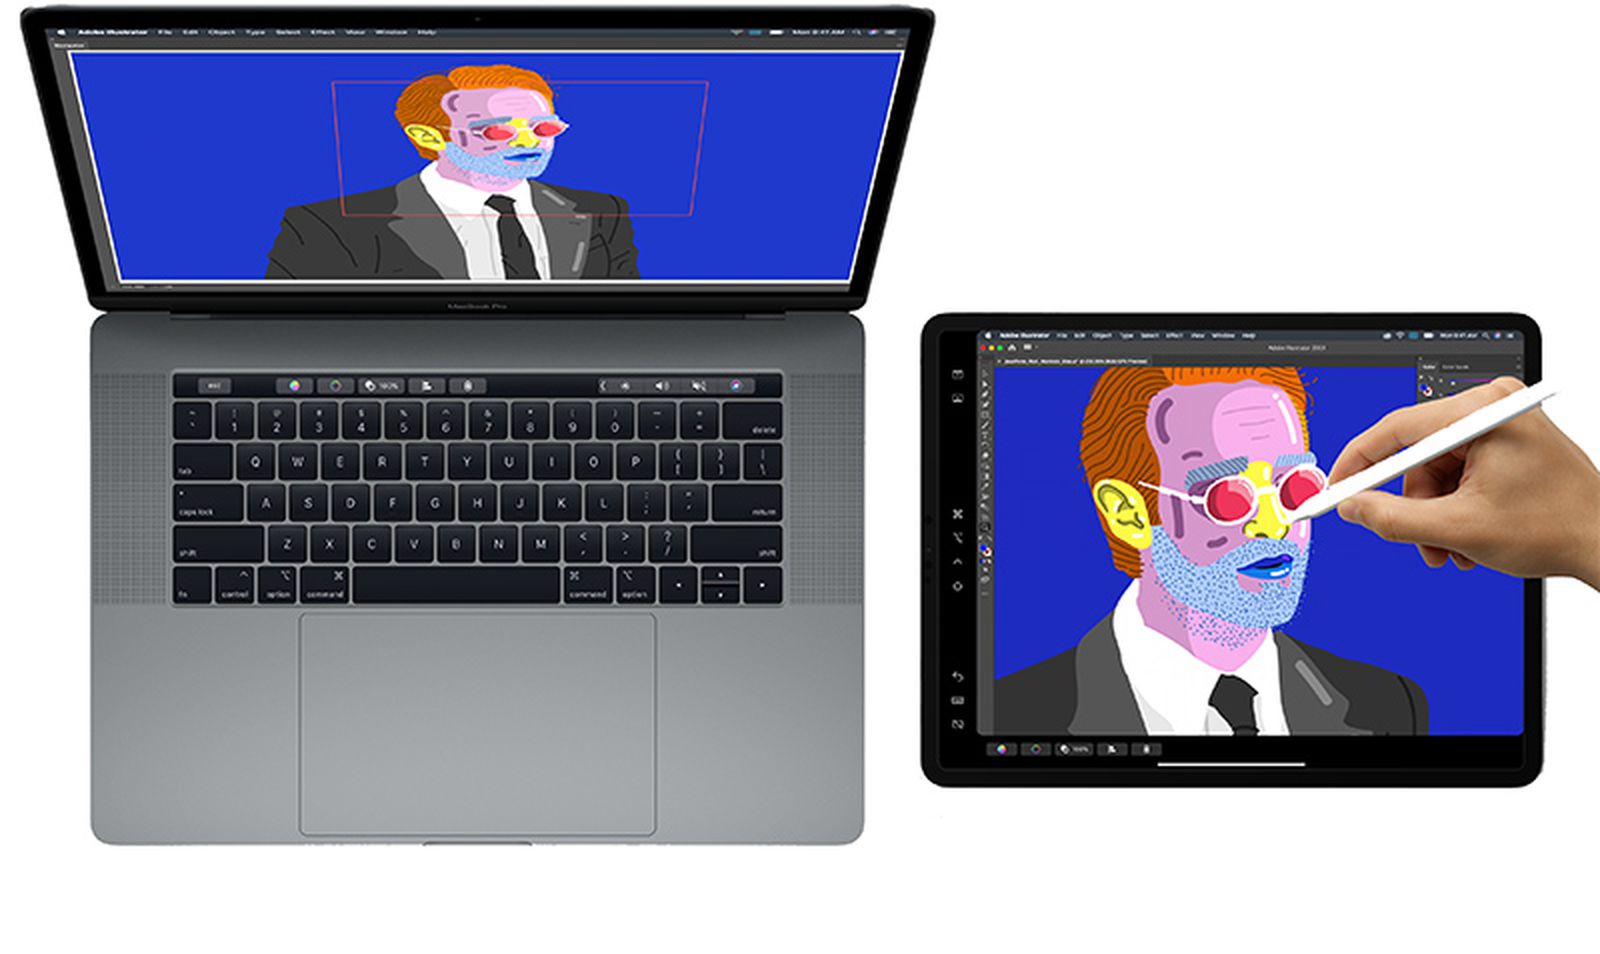 An Ipad Into A Secondary Mac Display, How To Mirror Macbook With Ipad